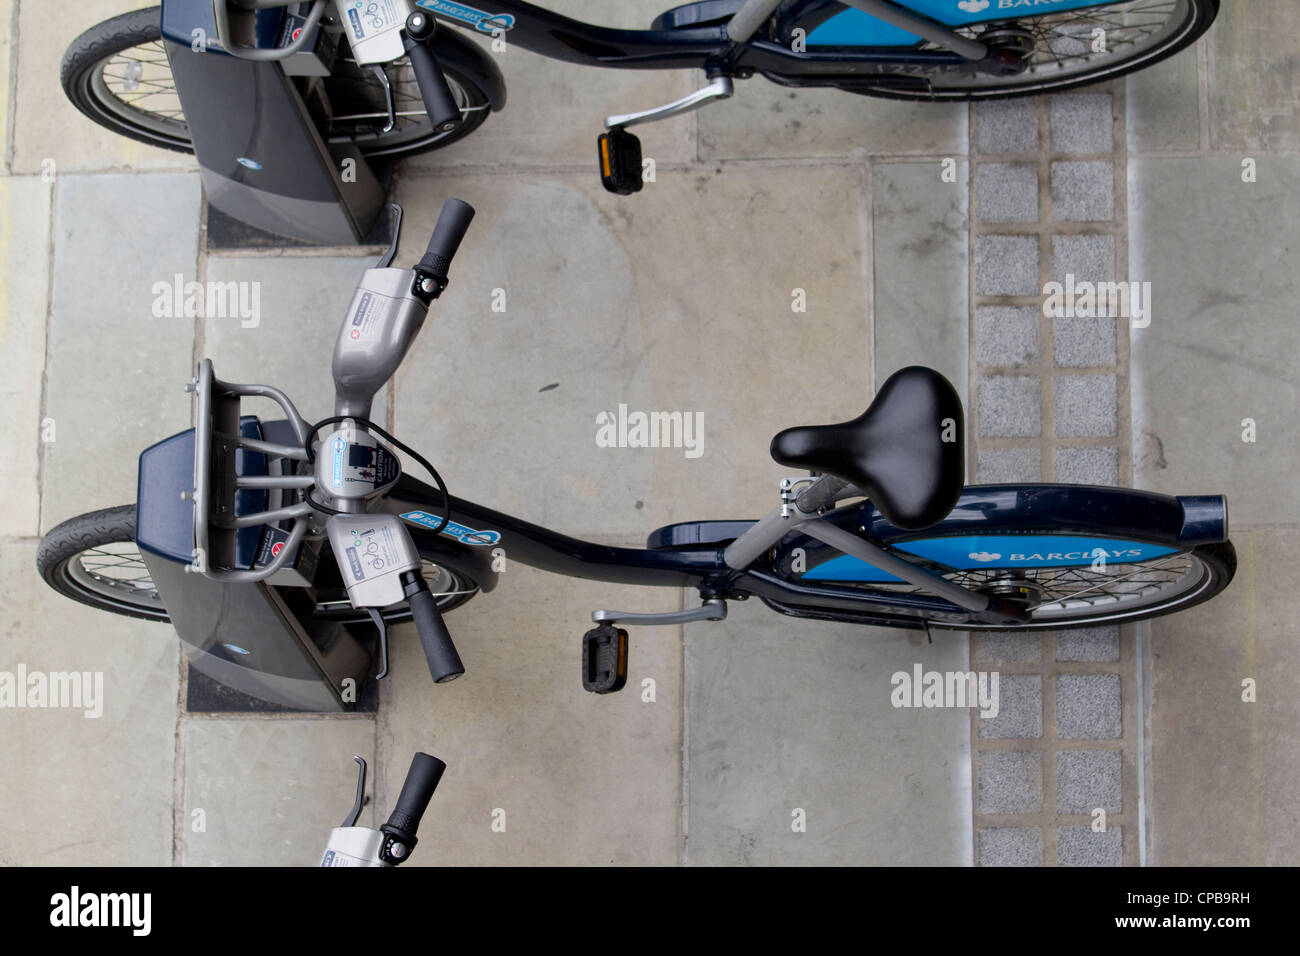 Boris bikes, London cycle regime di noleggio, blu barclays biciclette Foto Stock